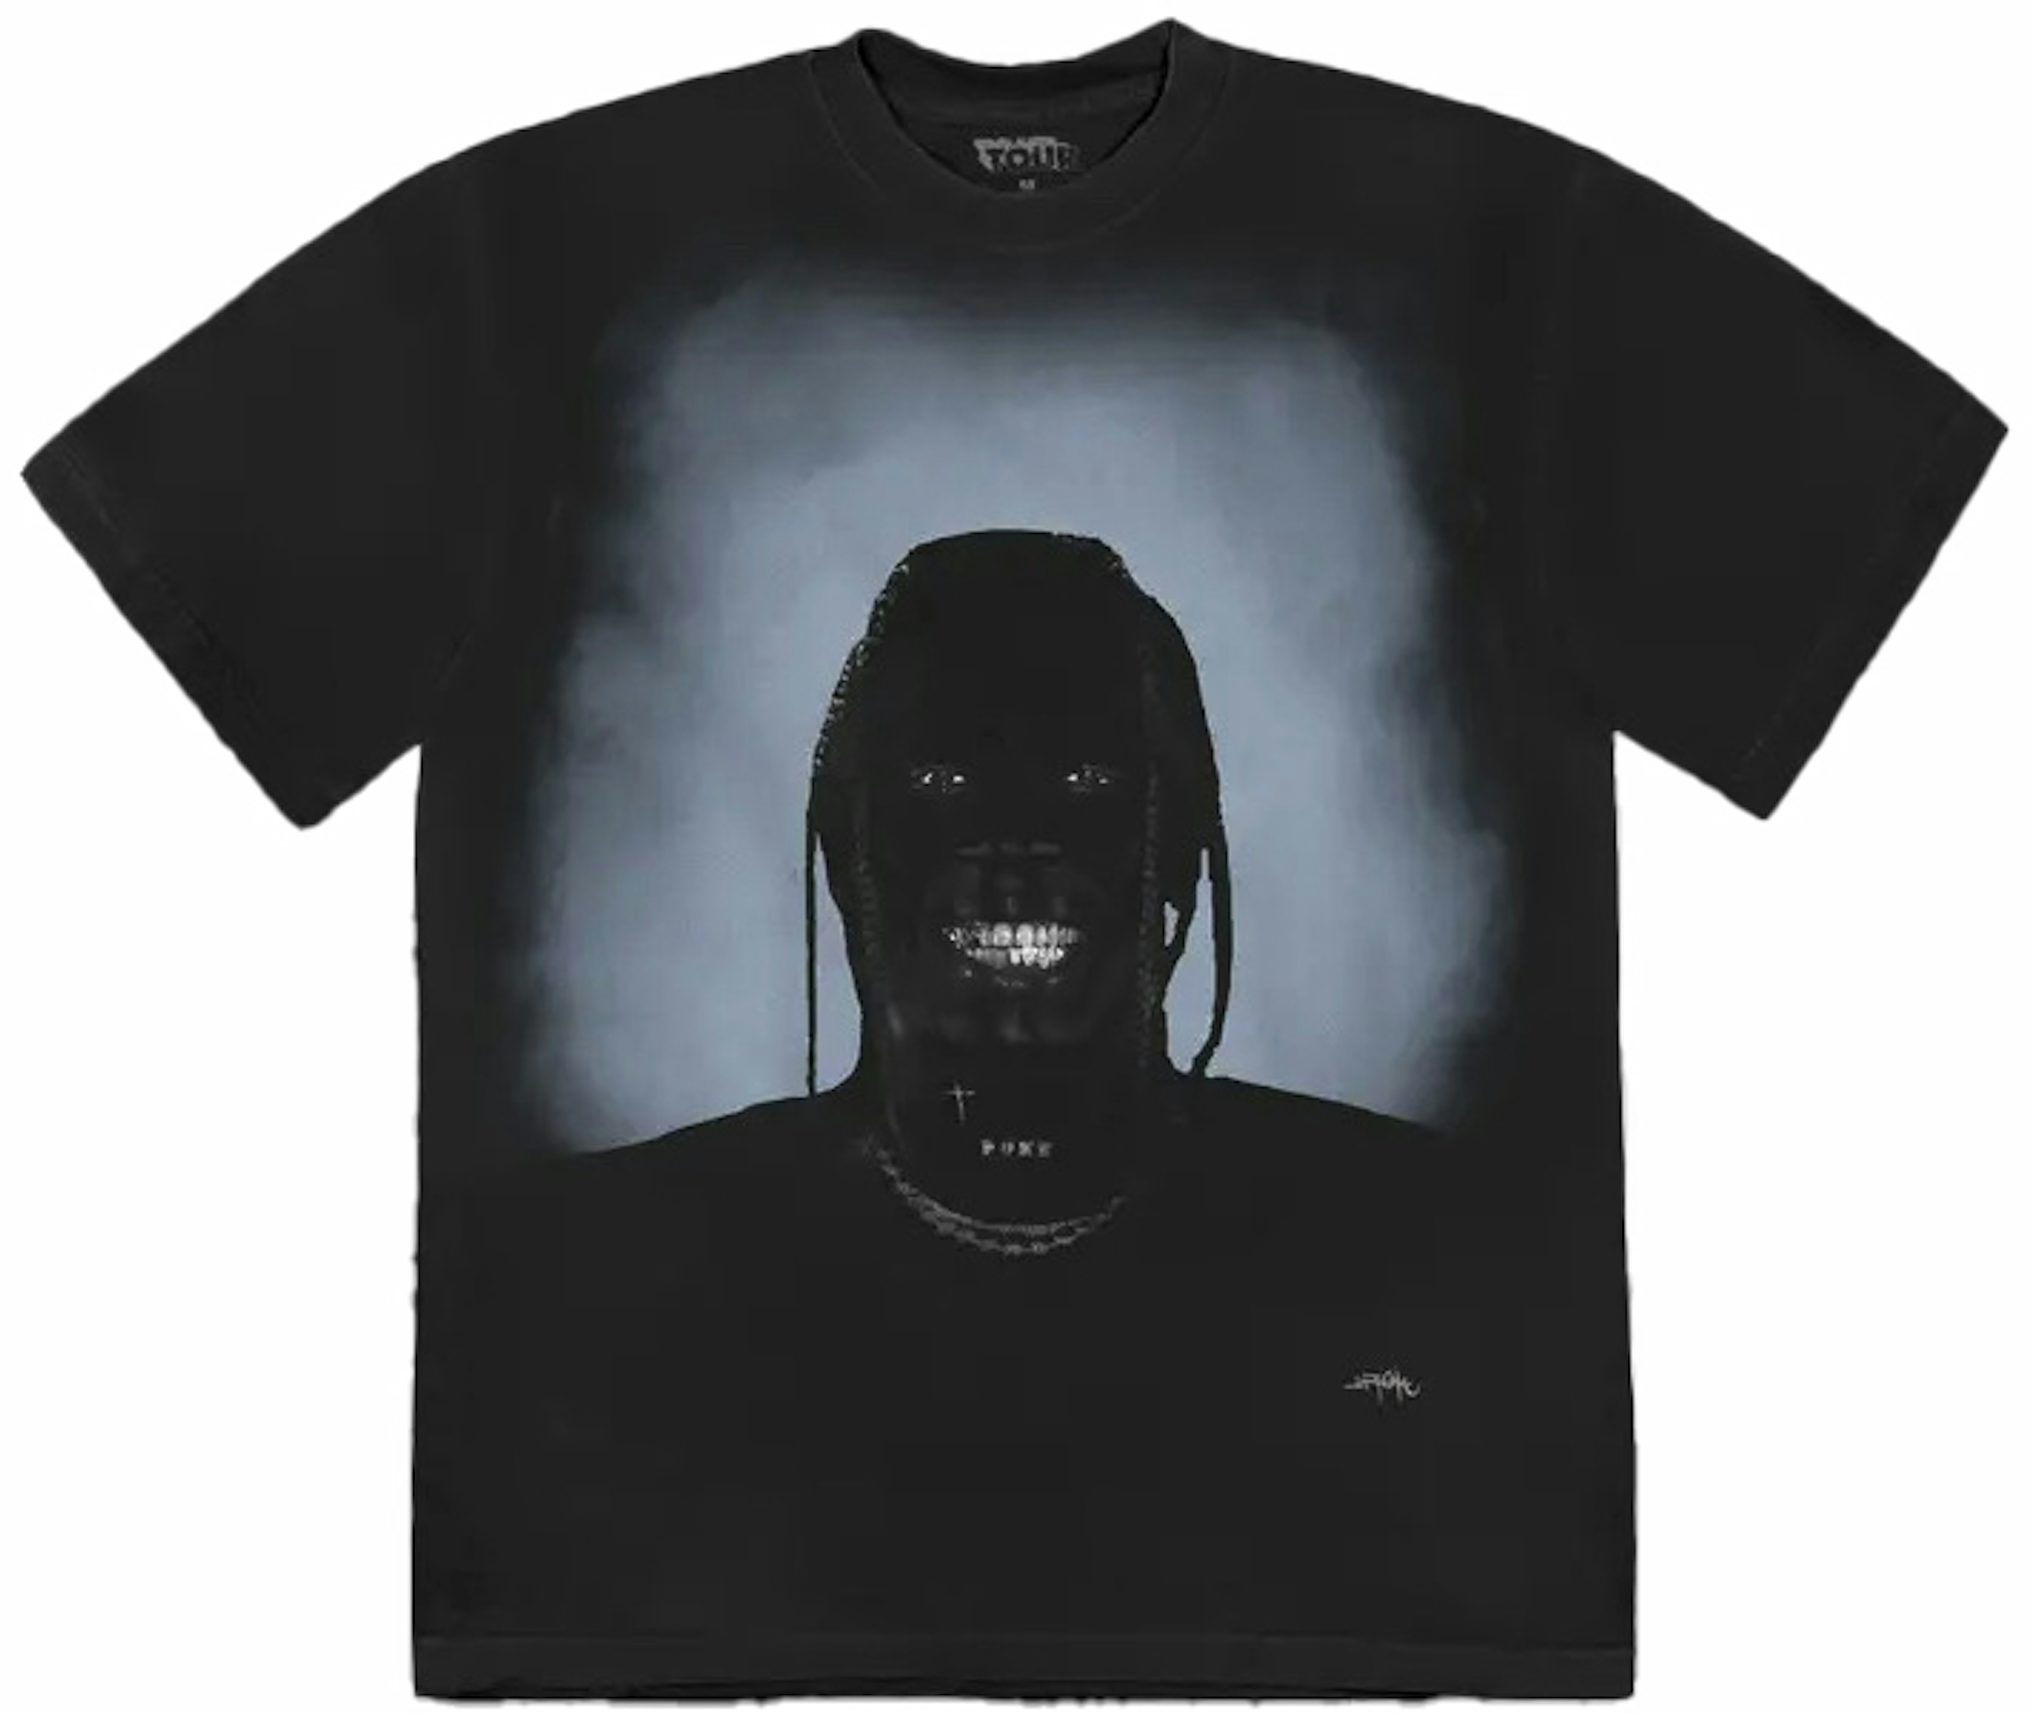 Buy Travis Scott Merch: T-Shirts, Hoodies, Apparel